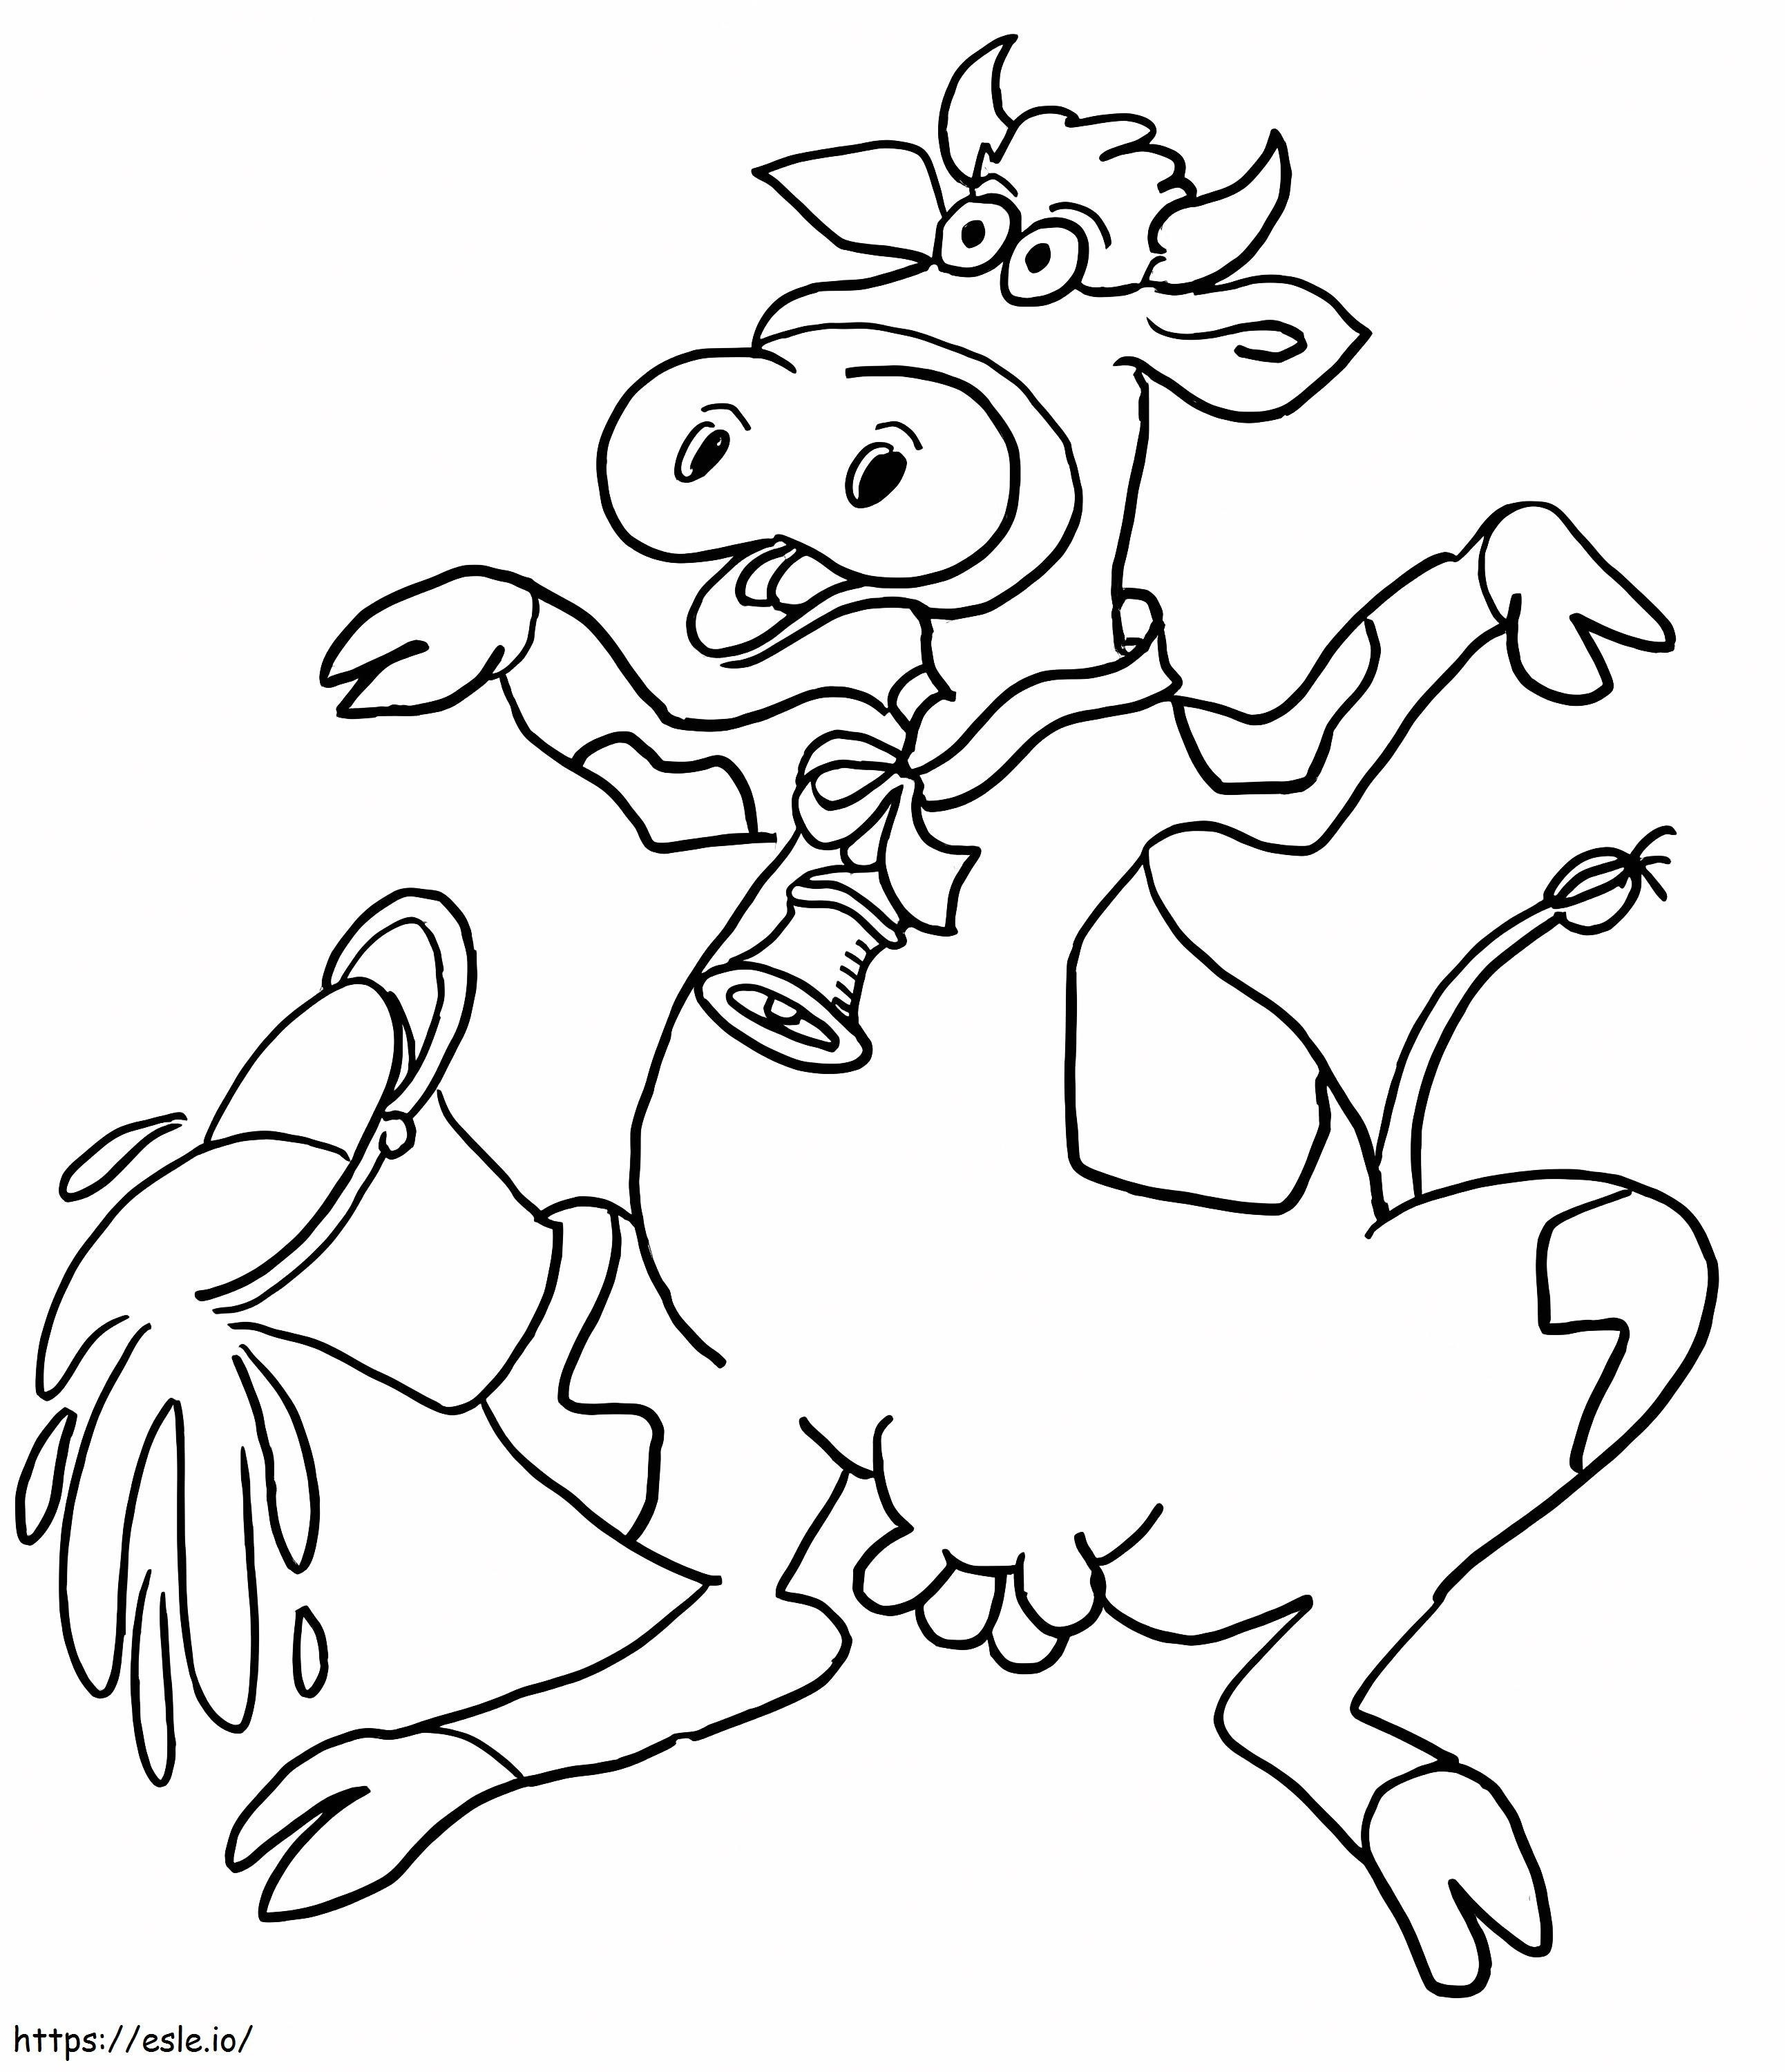 Funny Cartoon Cow coloring page